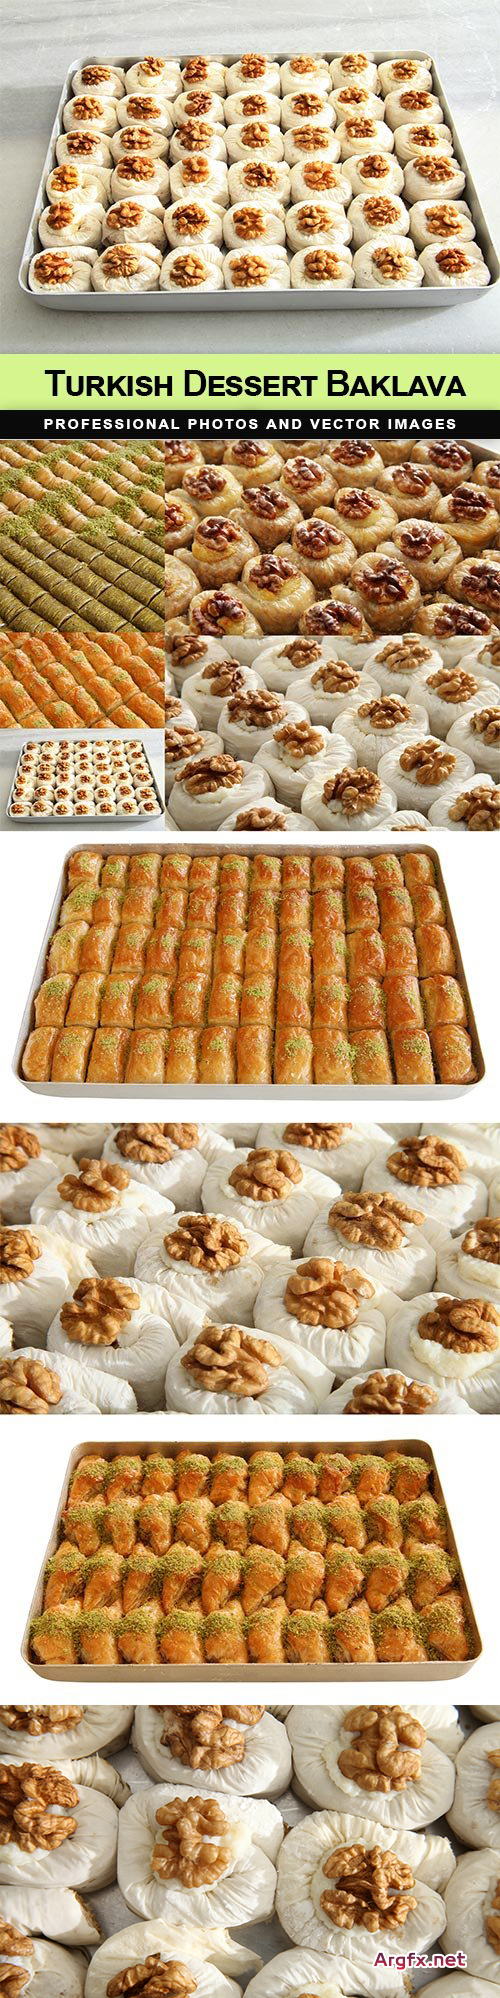 Turkish Dessert Baklava 10xJPG